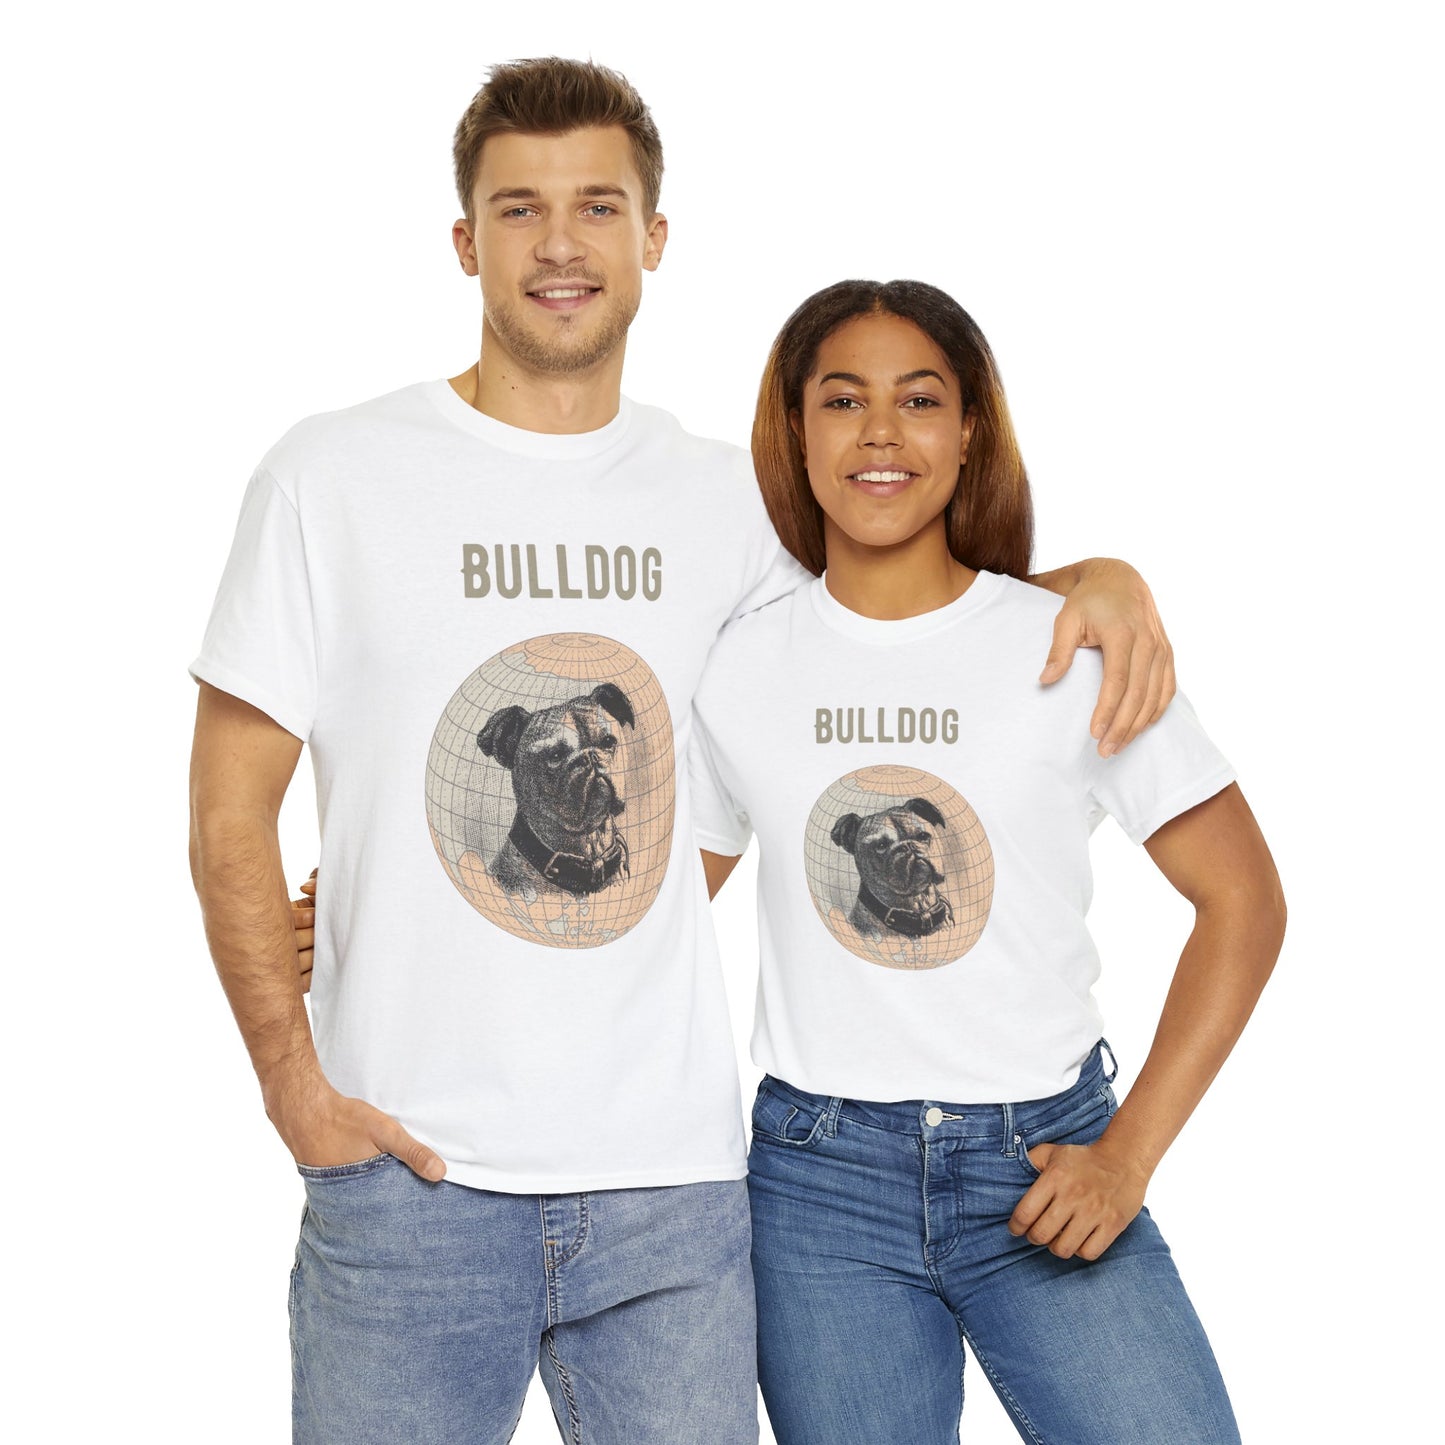 French BulldogT-Shirt, Old-World Map Tee